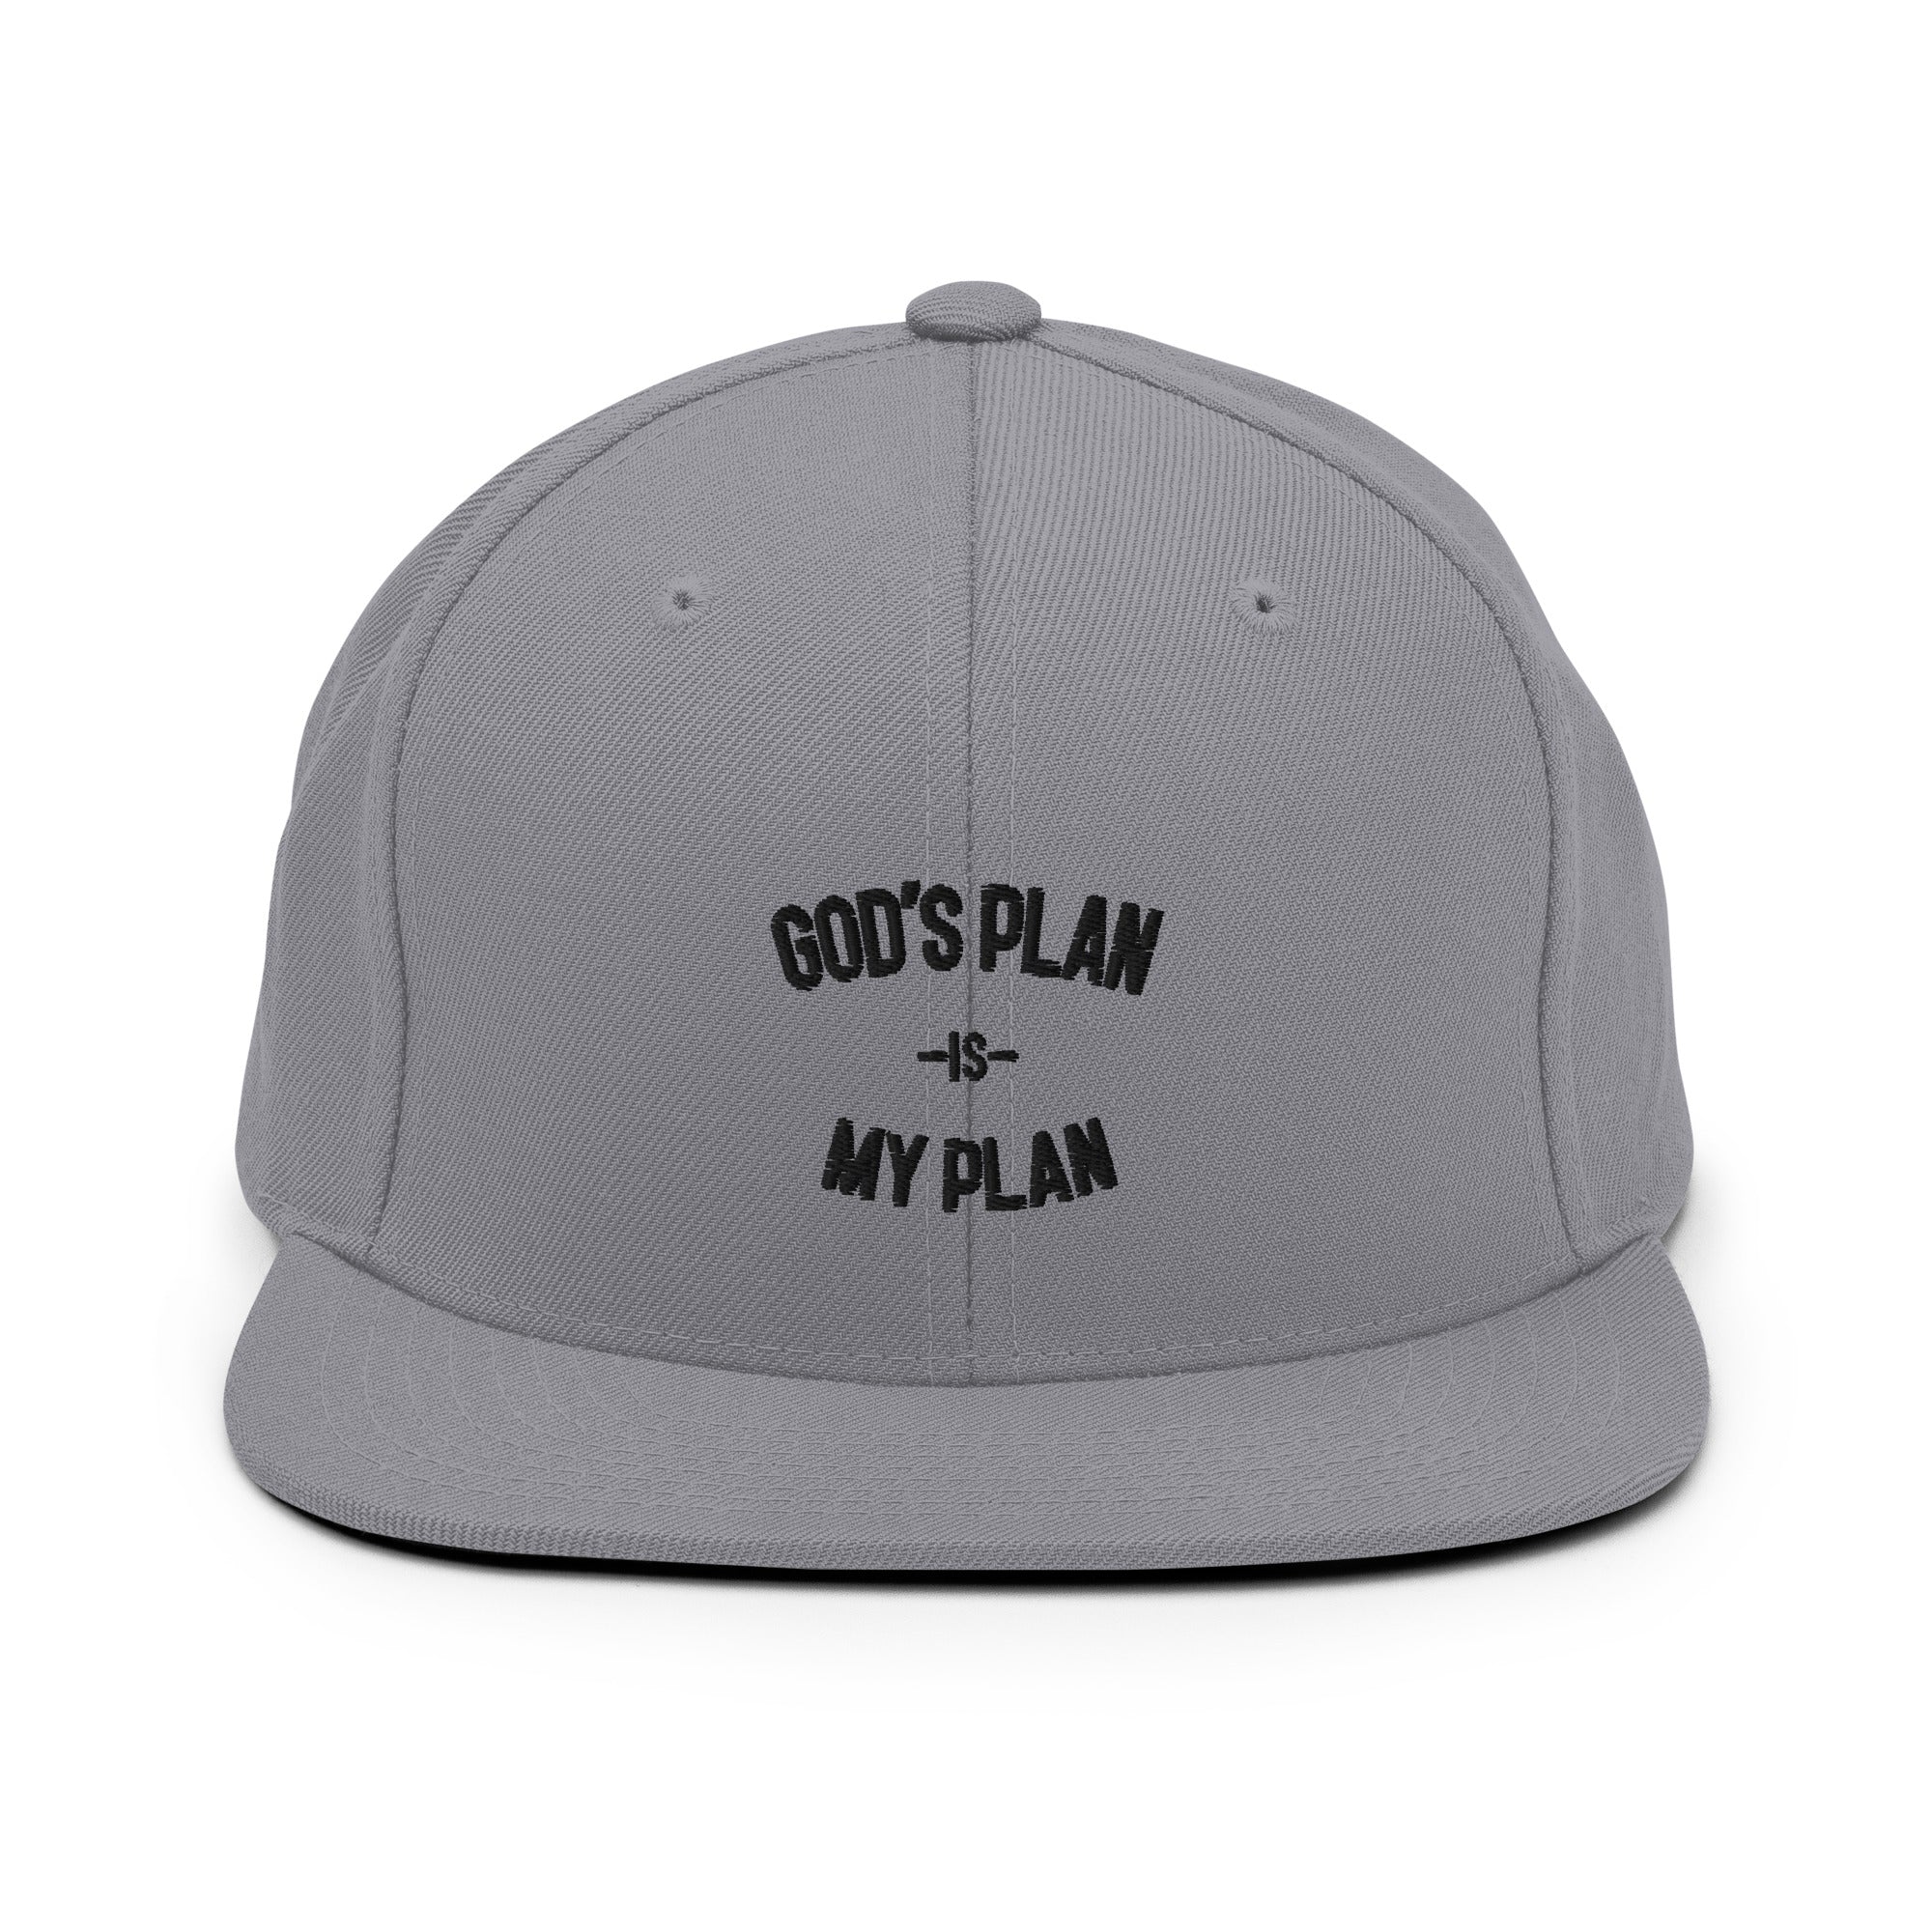 God's Plan My Plan Original Snapback Hat